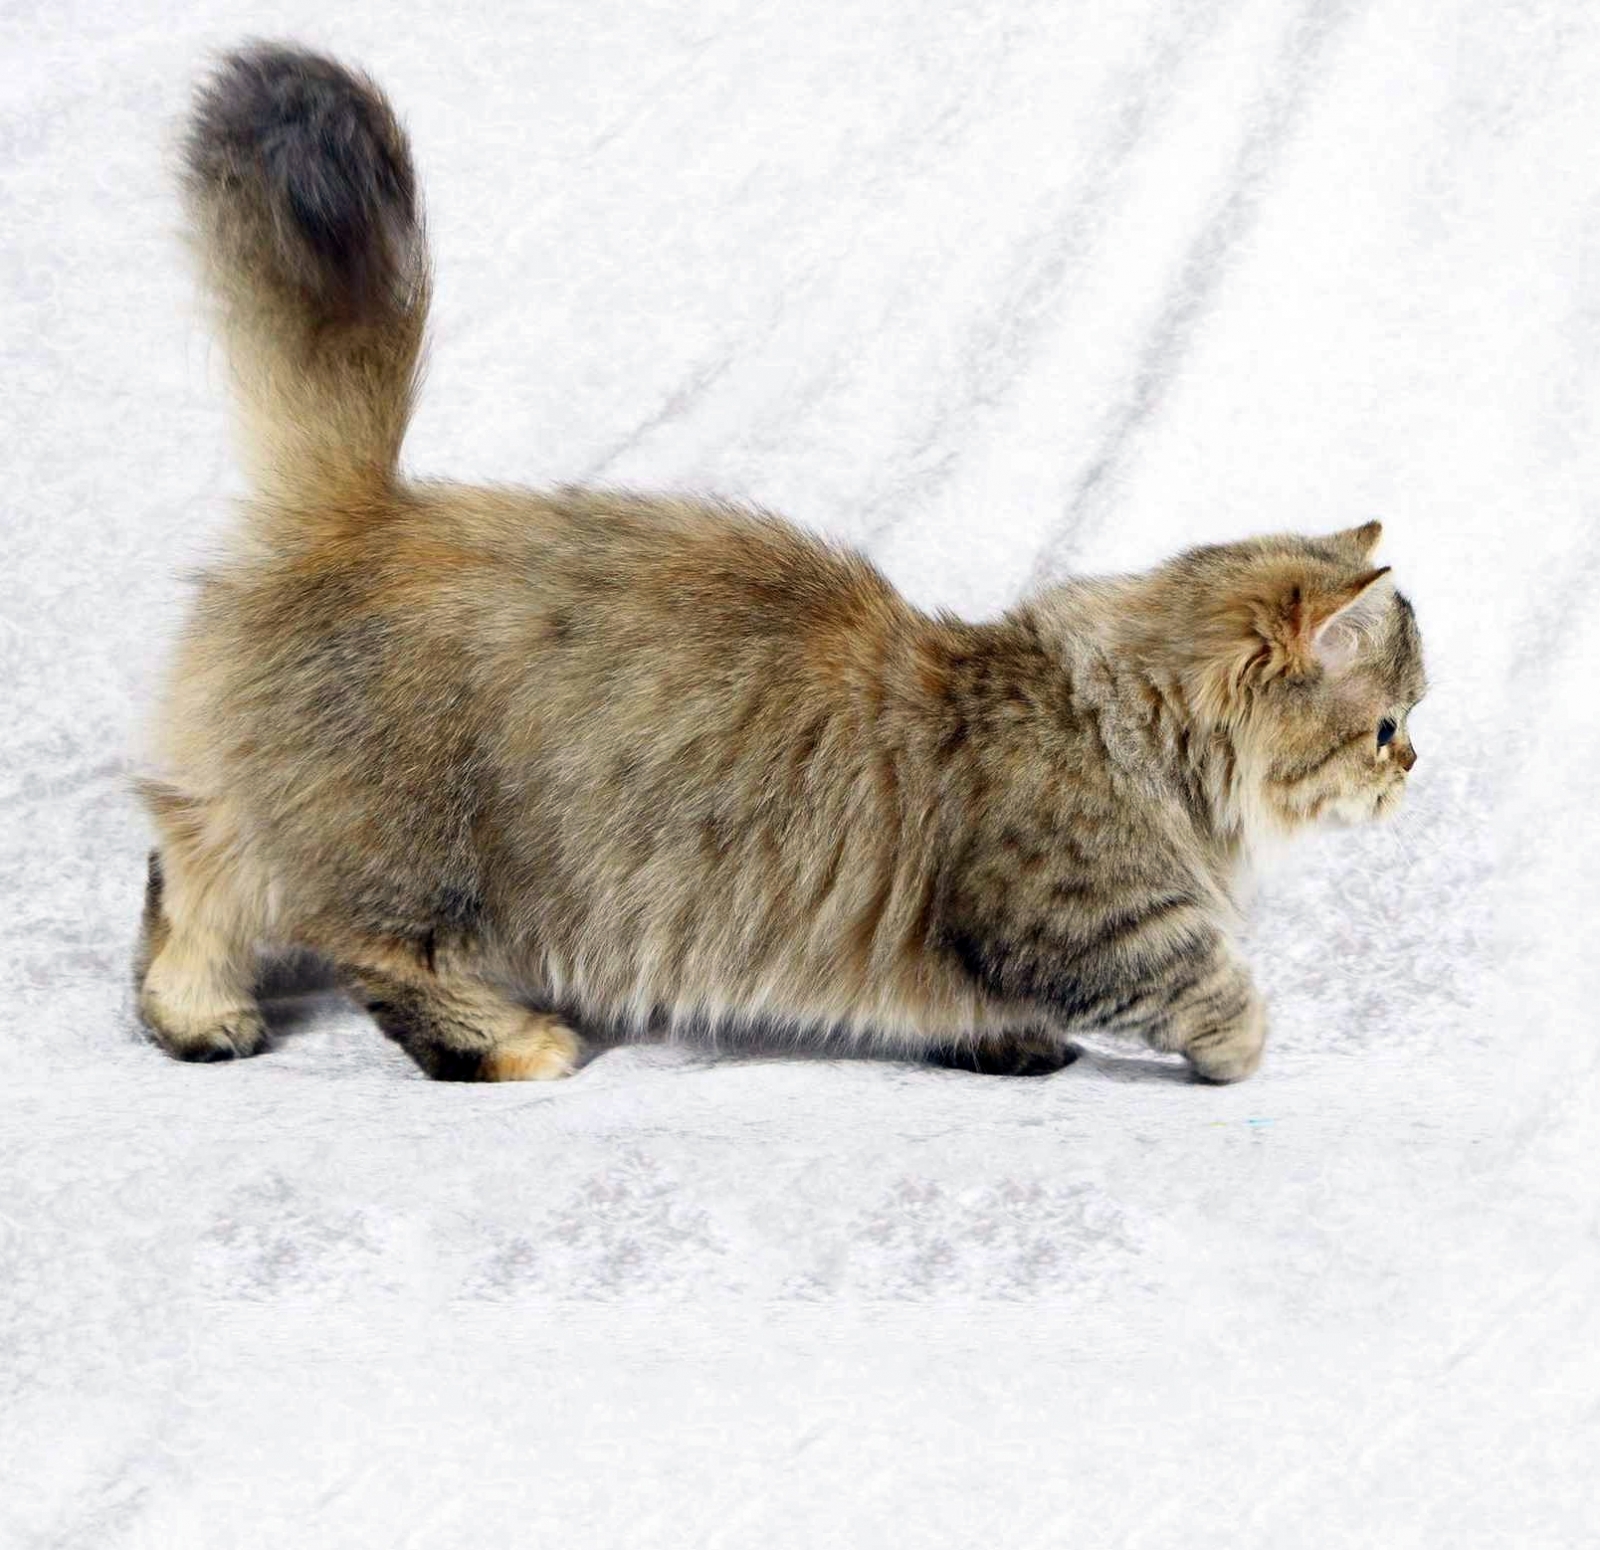 Short кот. Коротколапый Манчкин. Манчкин длинношёрстный кошка. Манчкин Менуэт Наполеон. Кошки породы Наполеон Манчкин.